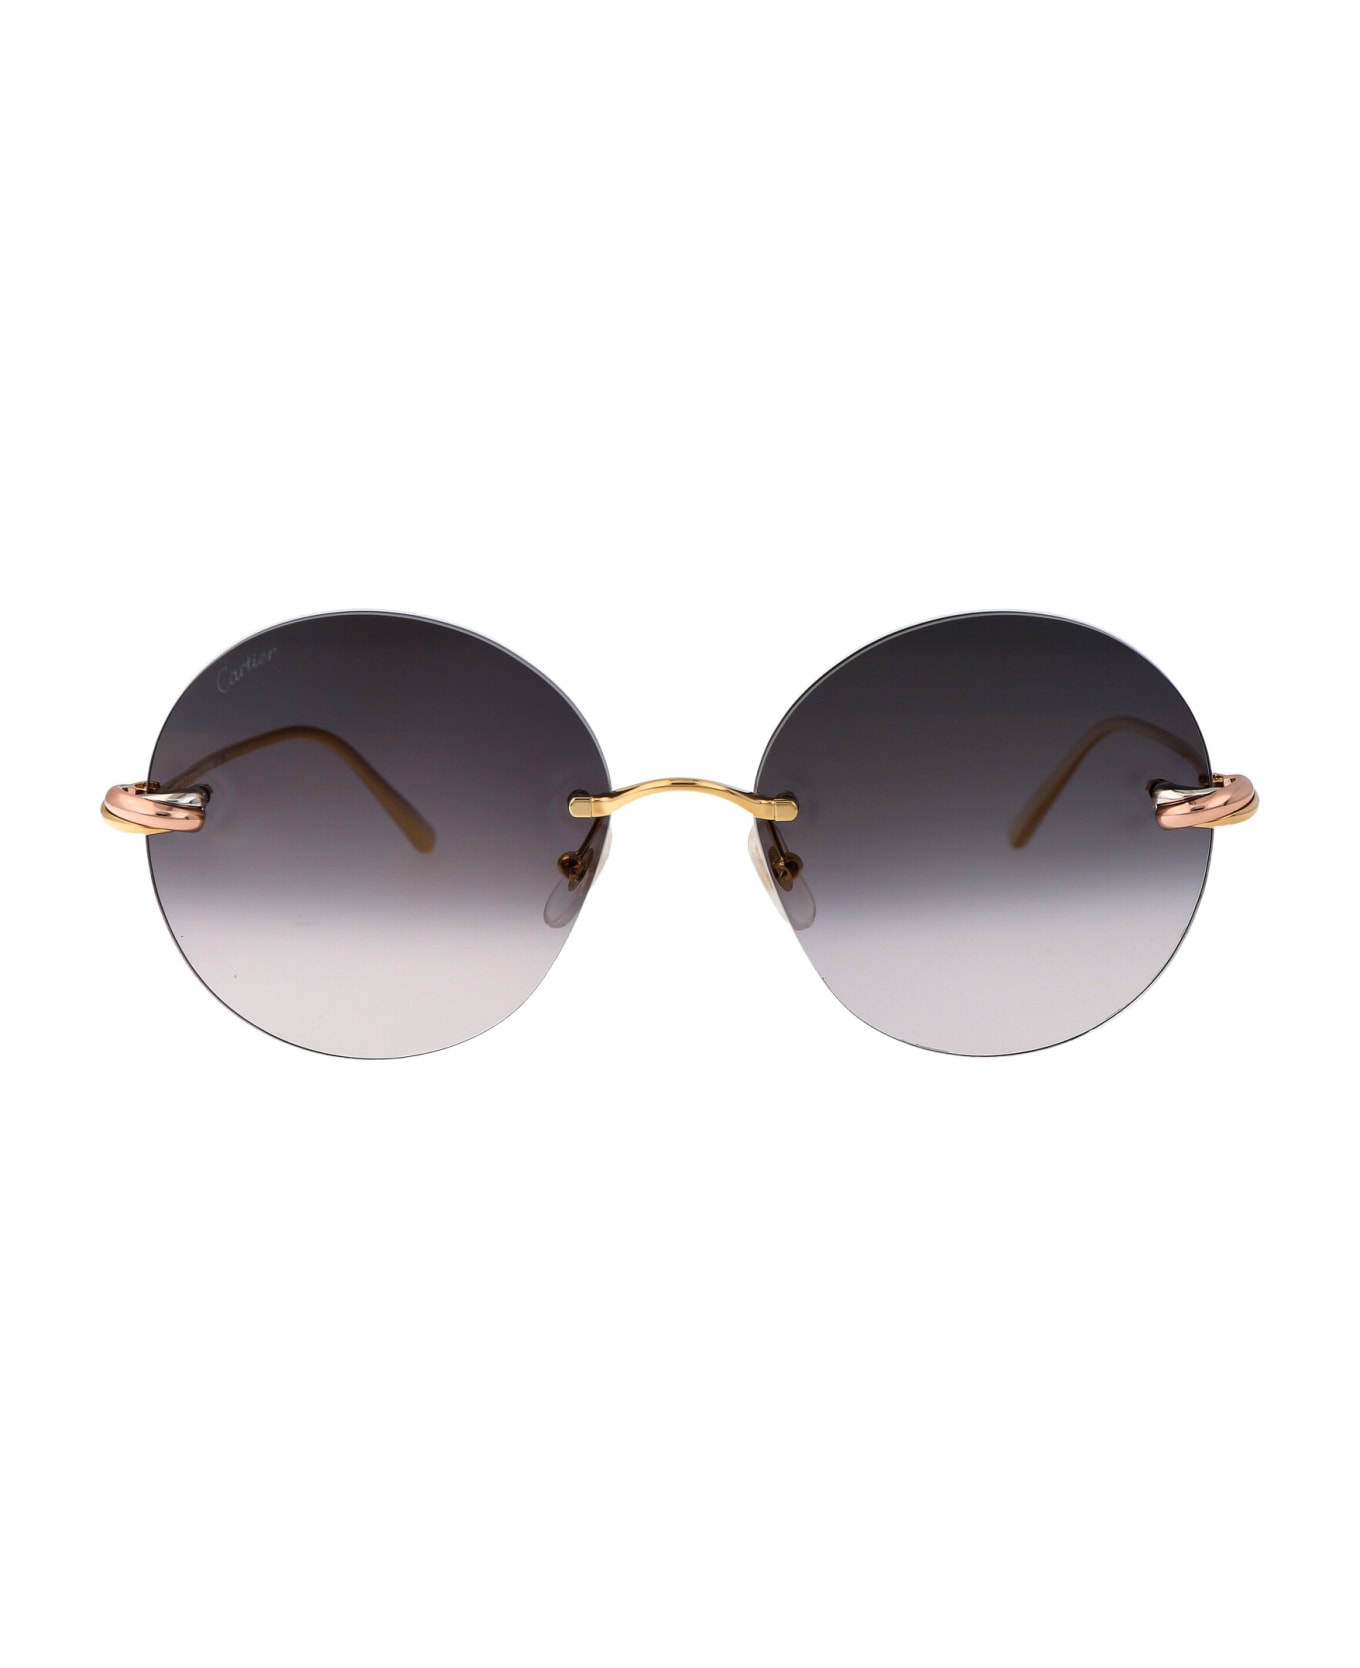 Cartier Eyewear Ct0475s Sunglasses - 001 GOLD GOLD GREY サングラス